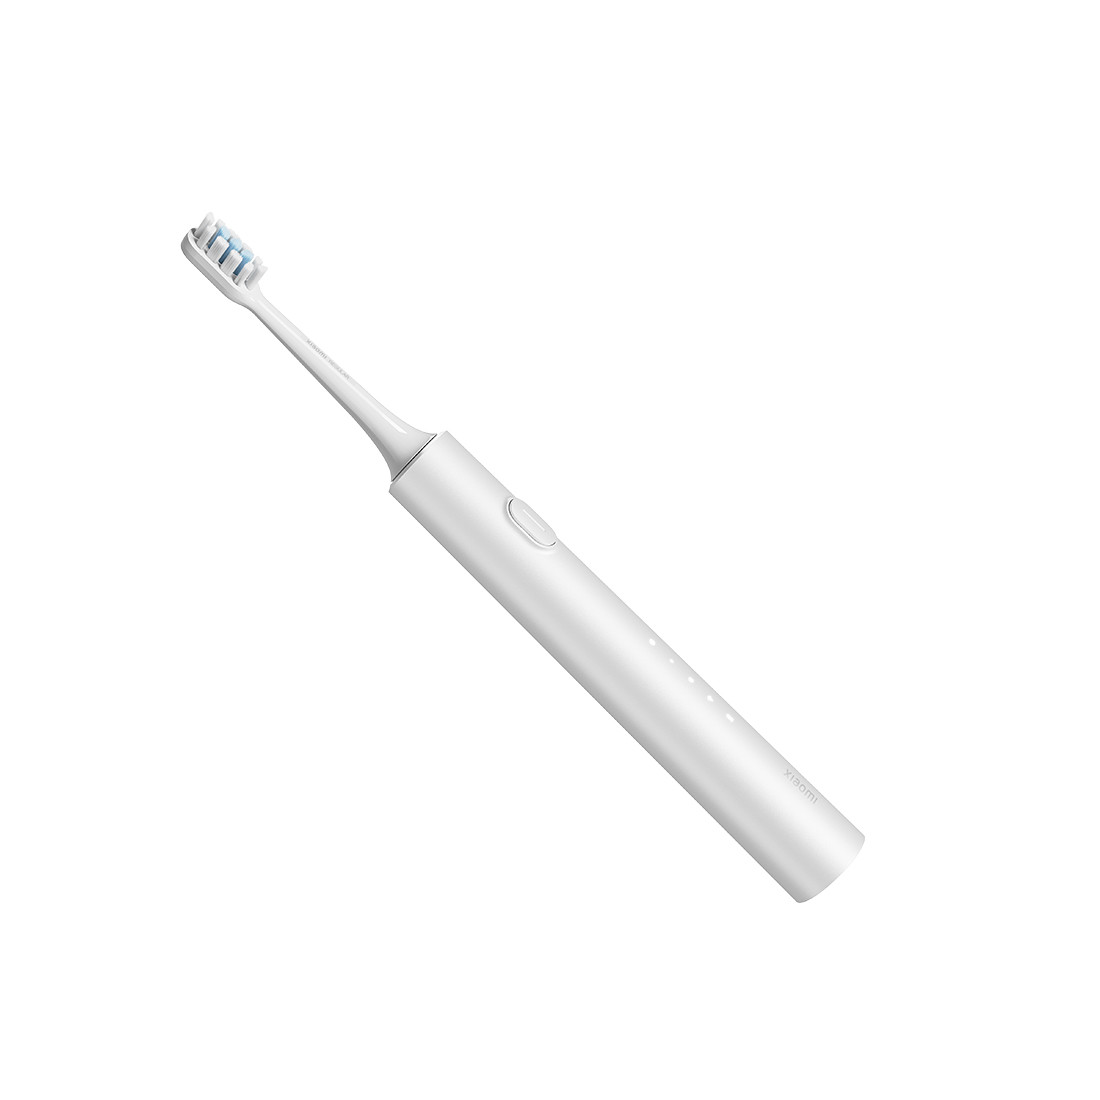 Xiaomi MES608 электрощетка зубная умная T302, 1050 мАч, IPX8, Время зарядки 4 ч, Серебристо-серый